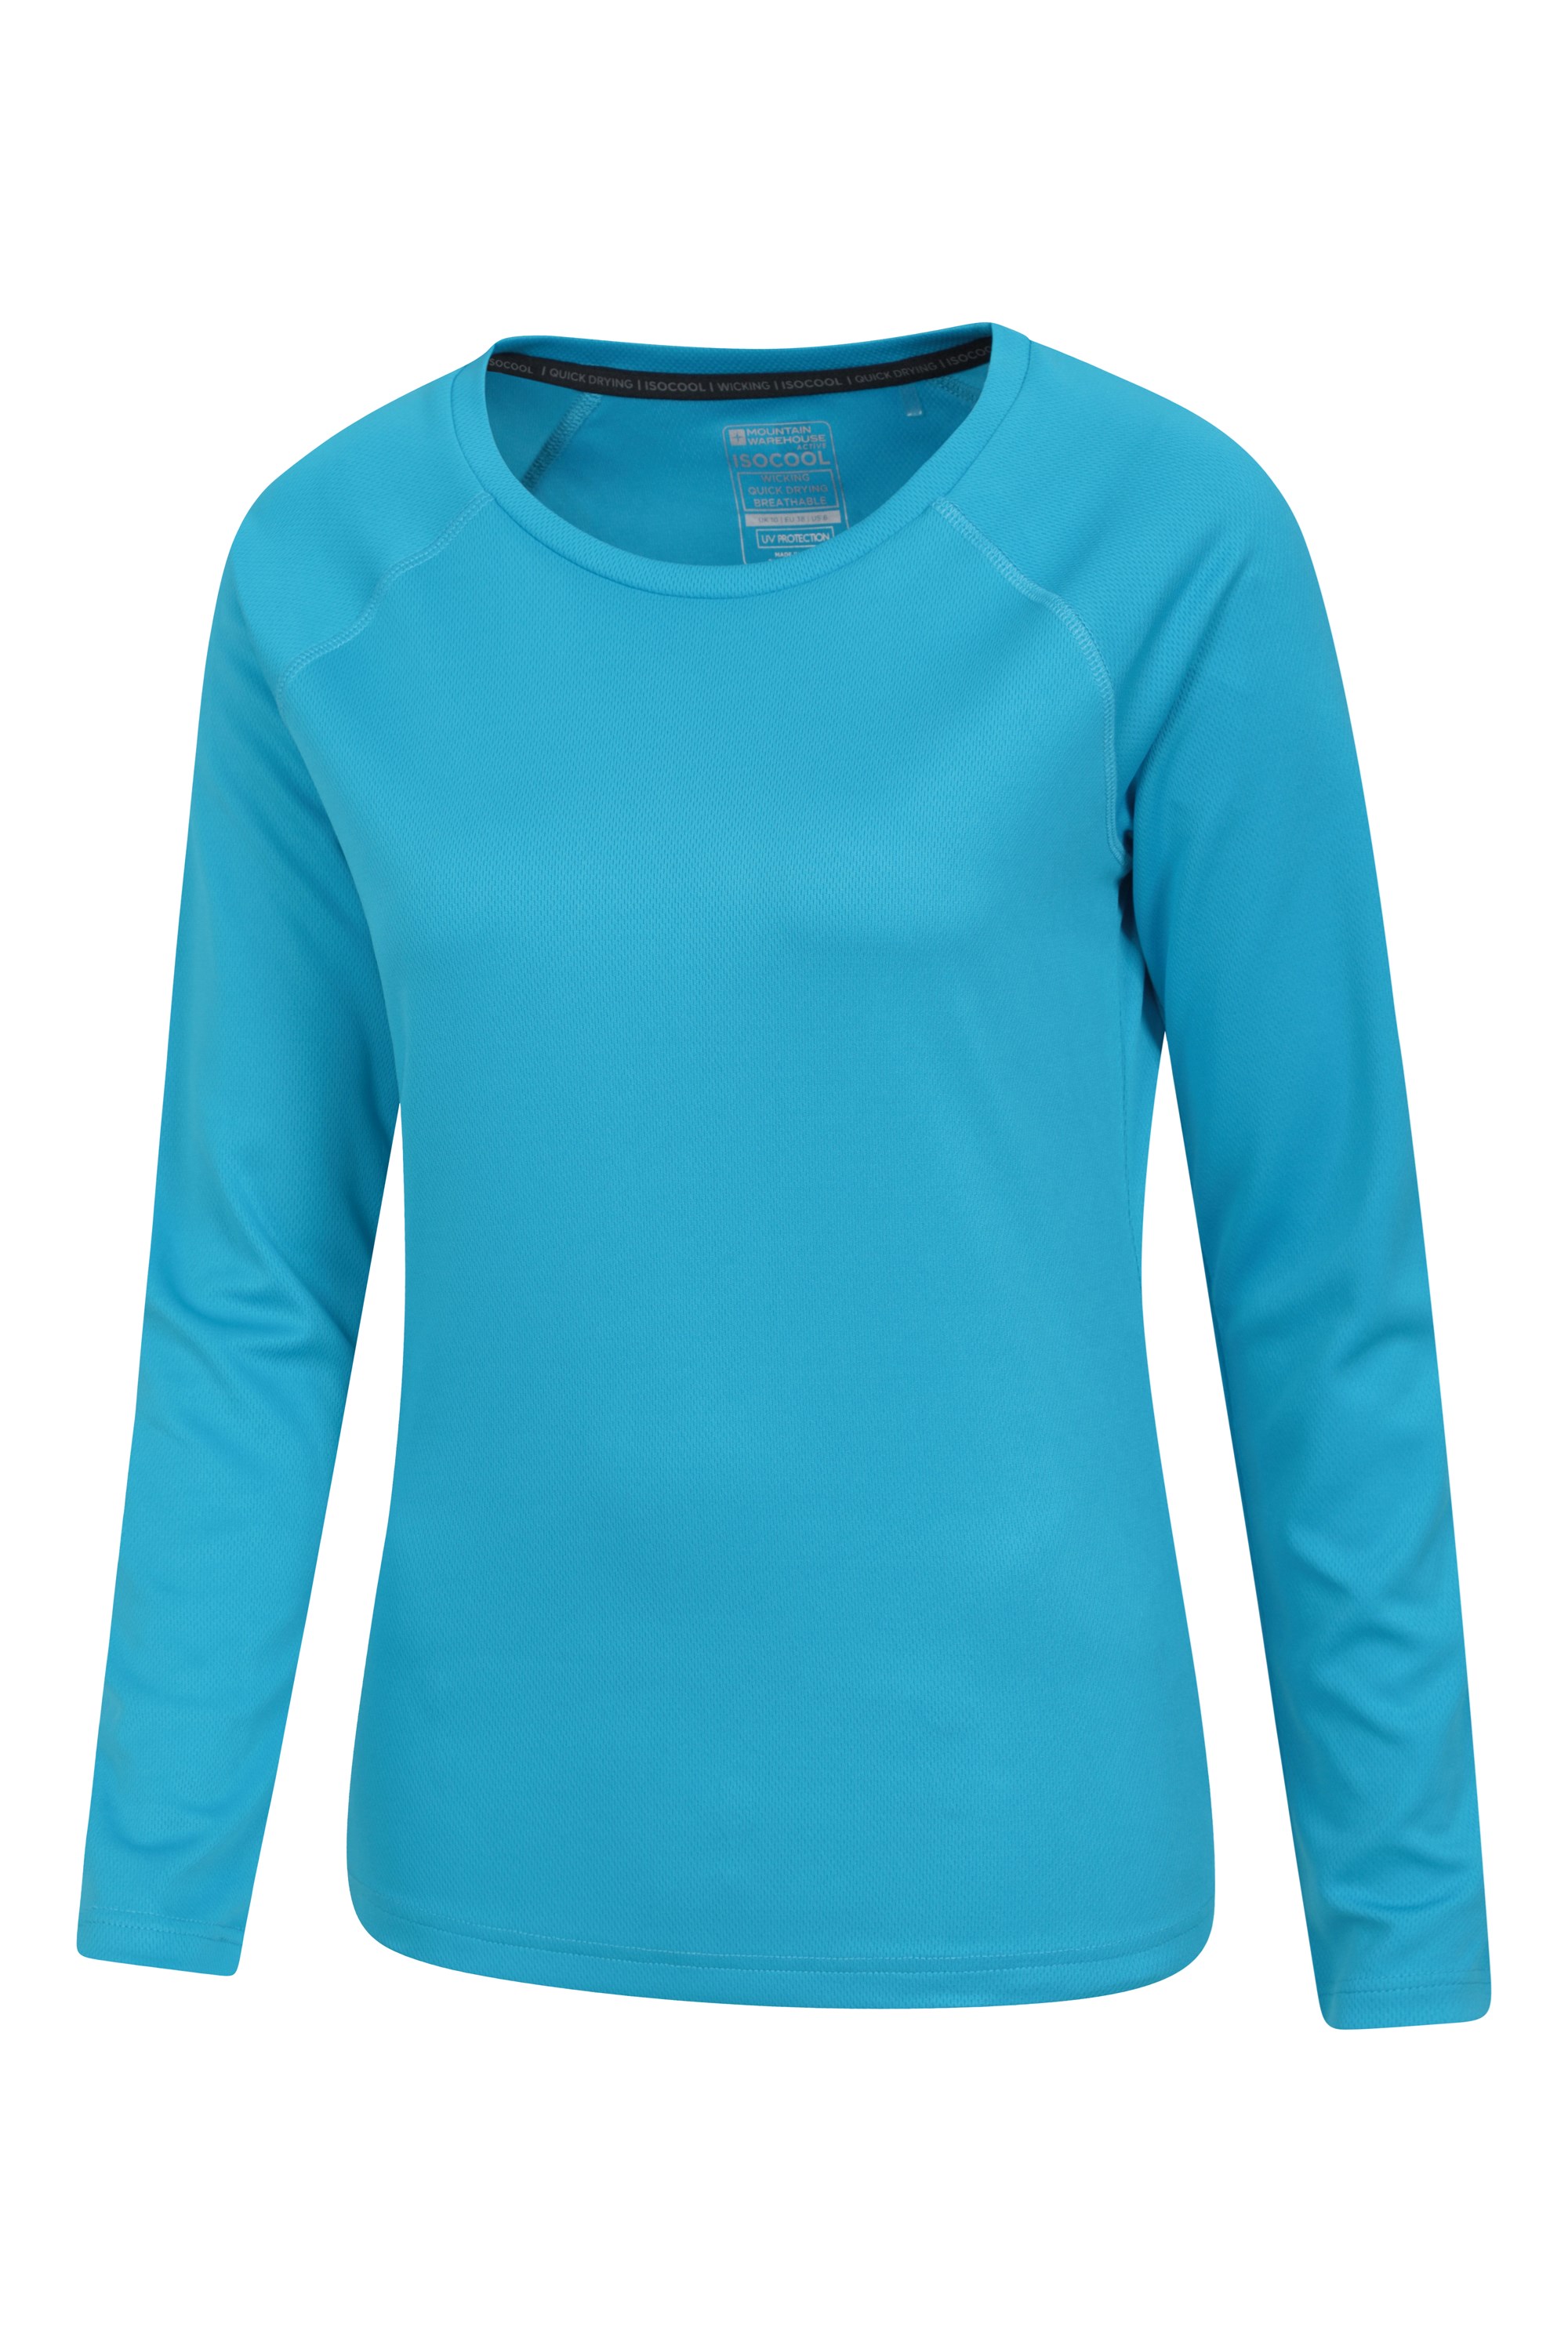 Endurance Womens Long Sleeve Top | Mountain Warehouse GB | Shirts